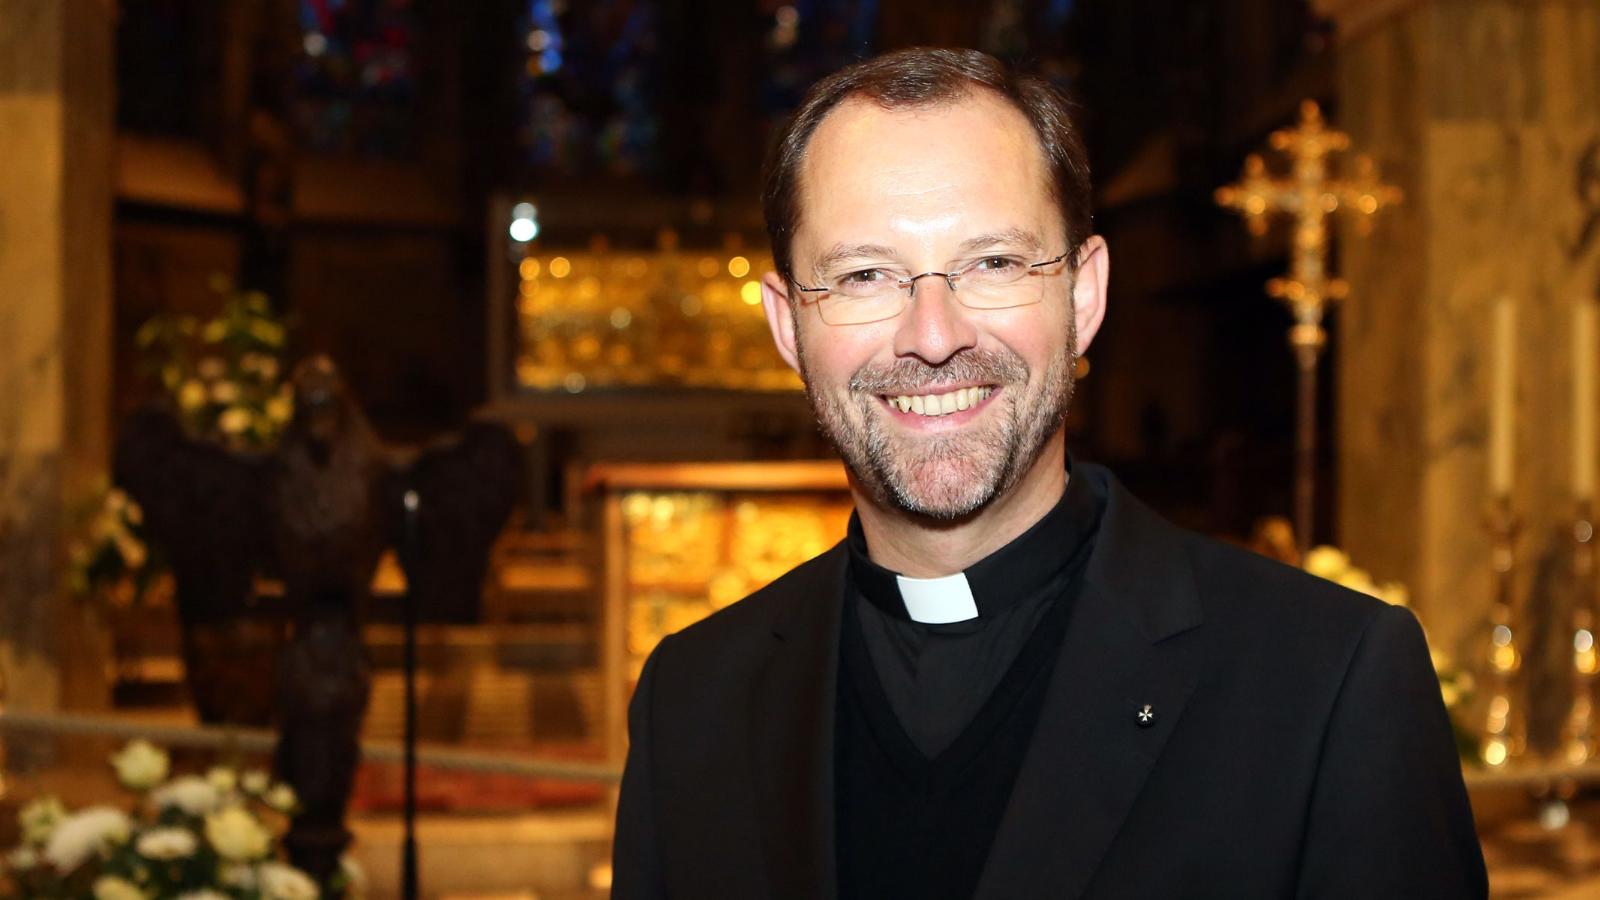 Dr. Andreas Frick (c) Bistum Aachen - Andreas Steindl